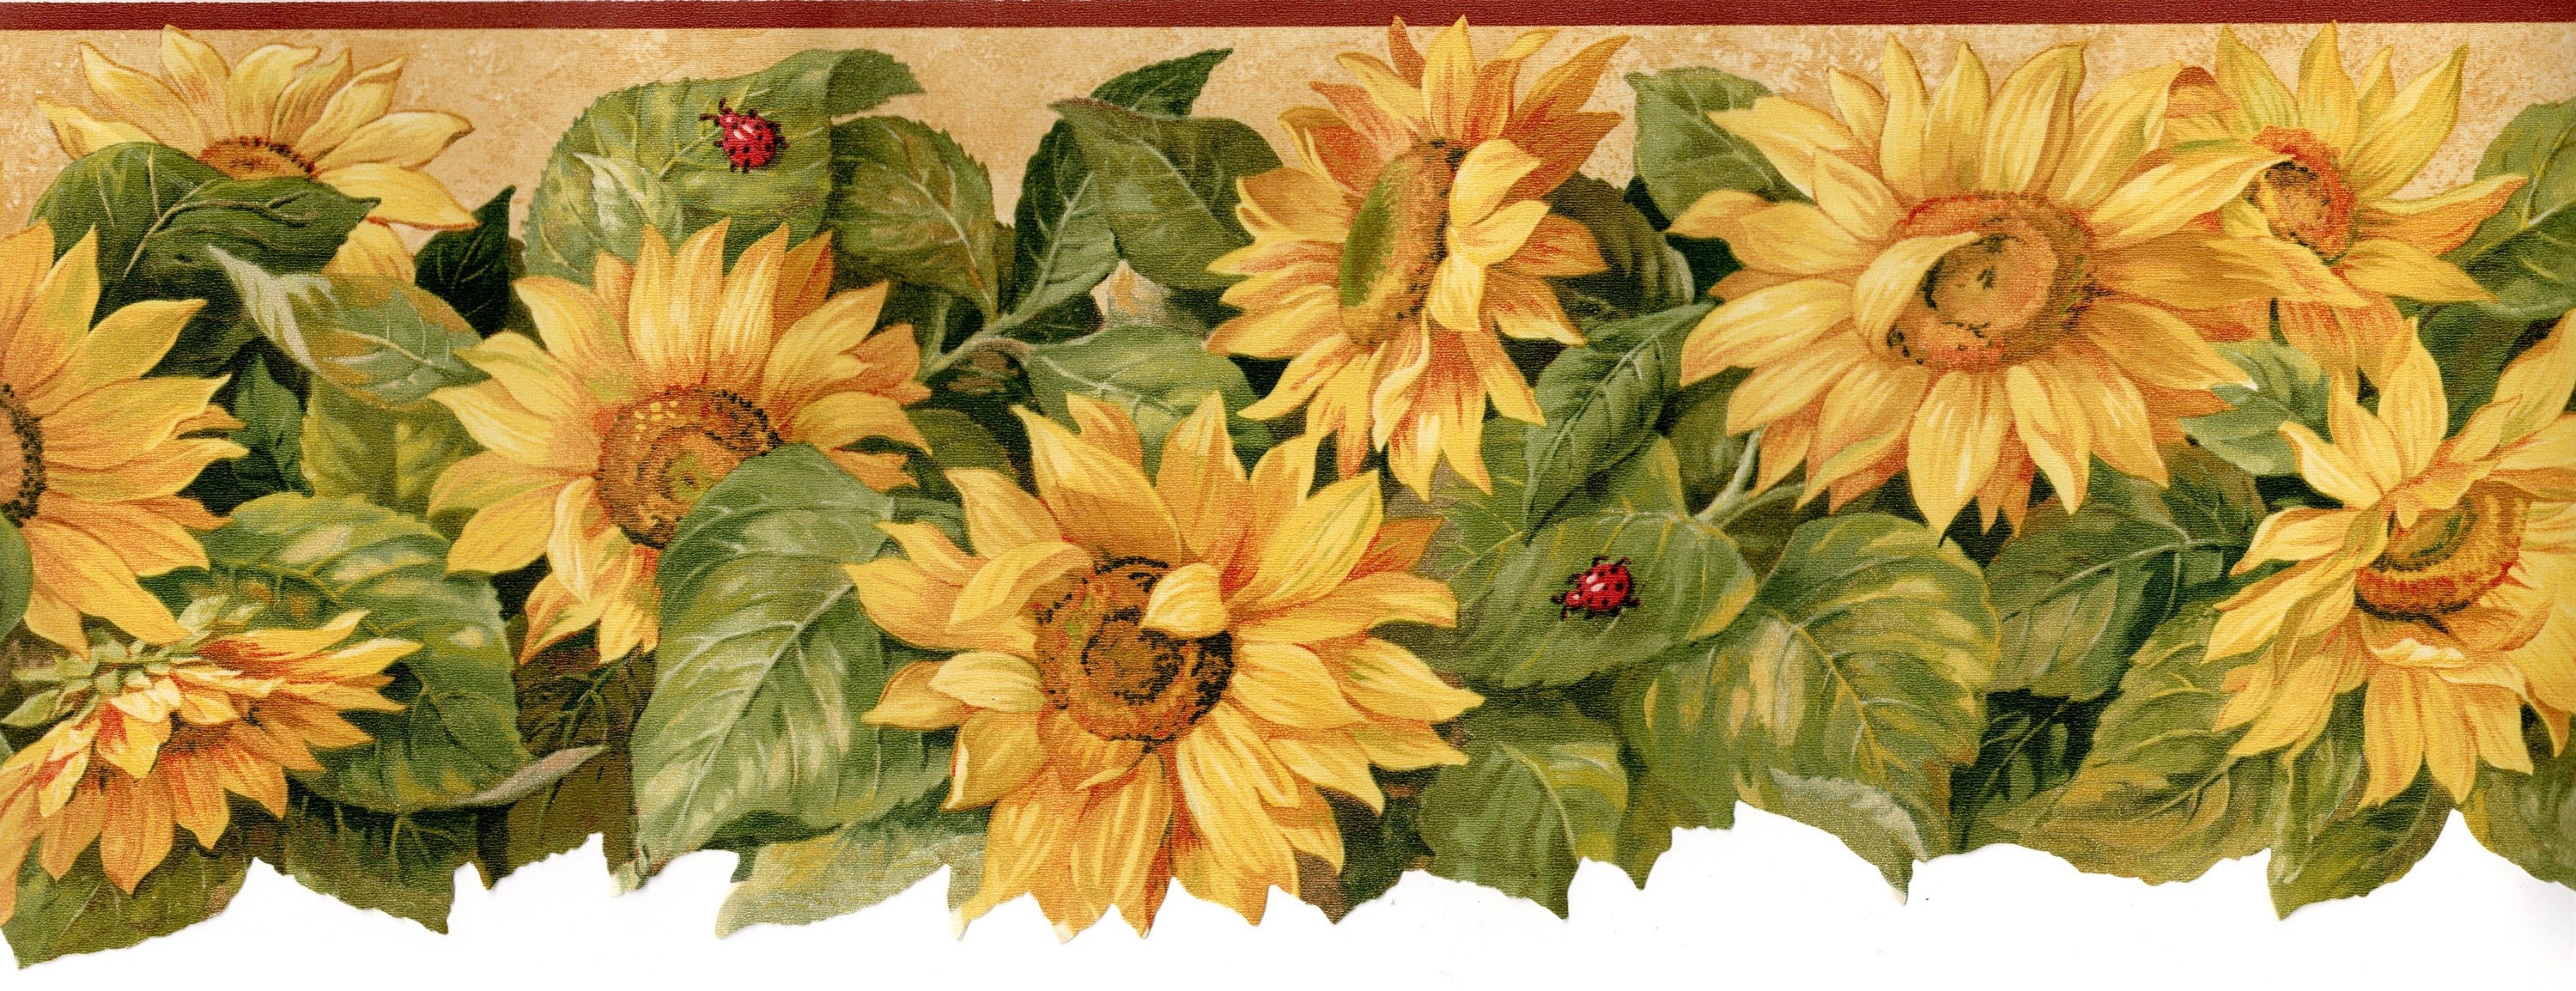 Sunflower Tin Stars Berries Peg Wallpaper Border CB5516bd br CLEARANCE  QUANTITIES LIMITED